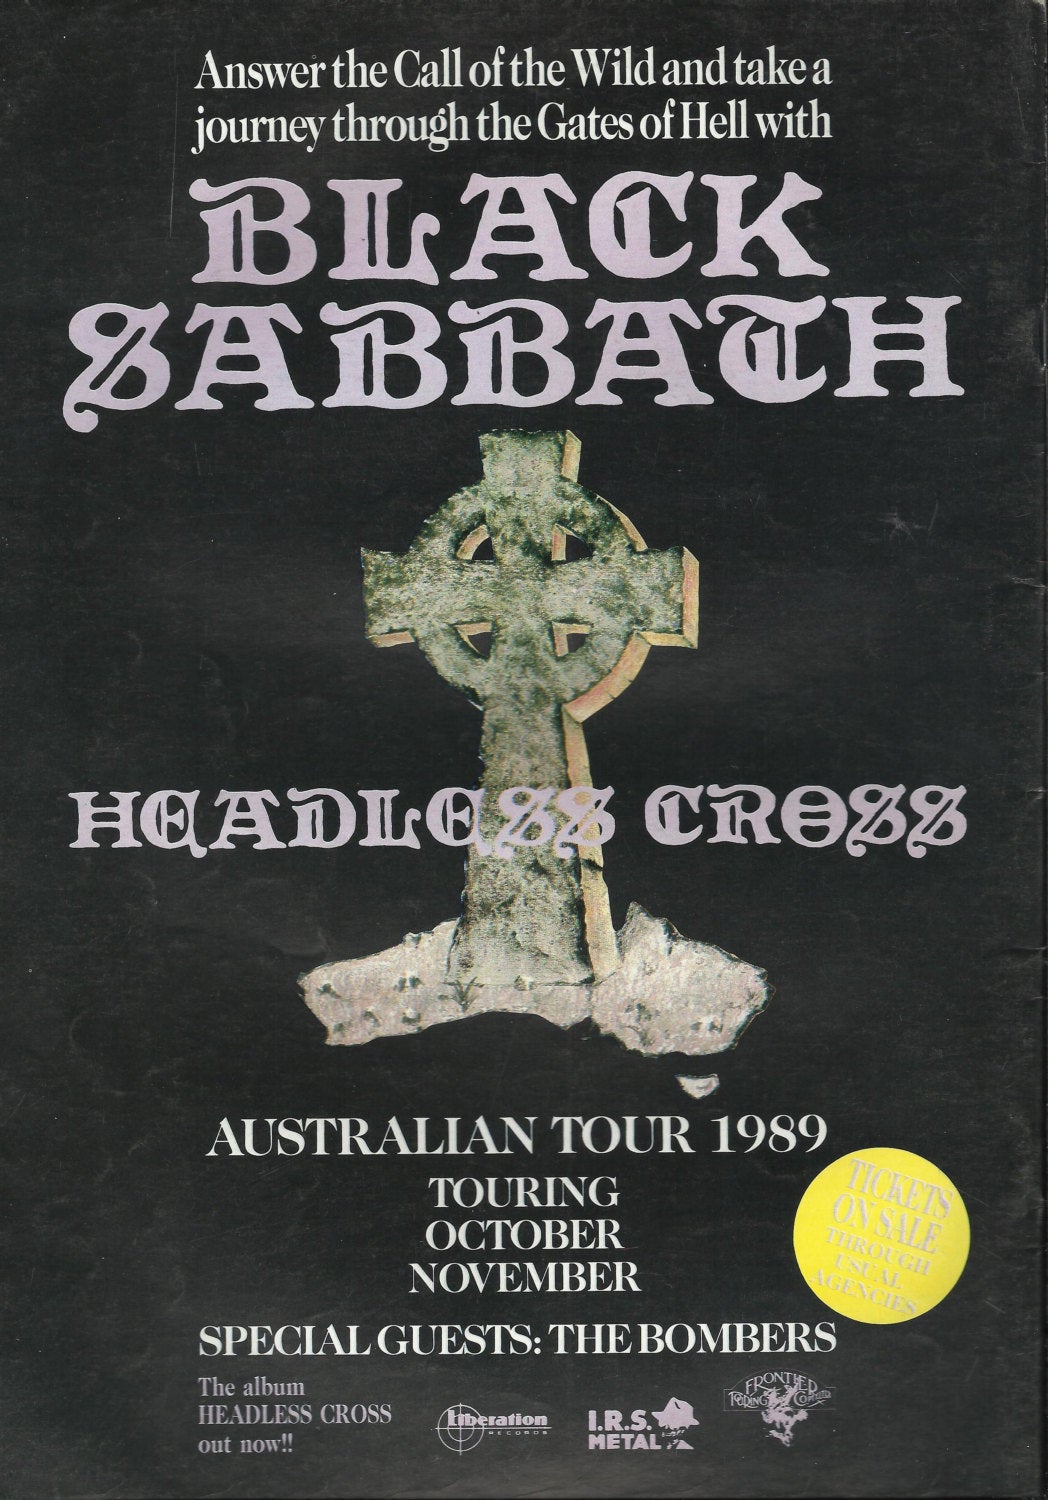 Vintage Music Art Poster - Black Sabbath Australian Tour 1989  - 0376